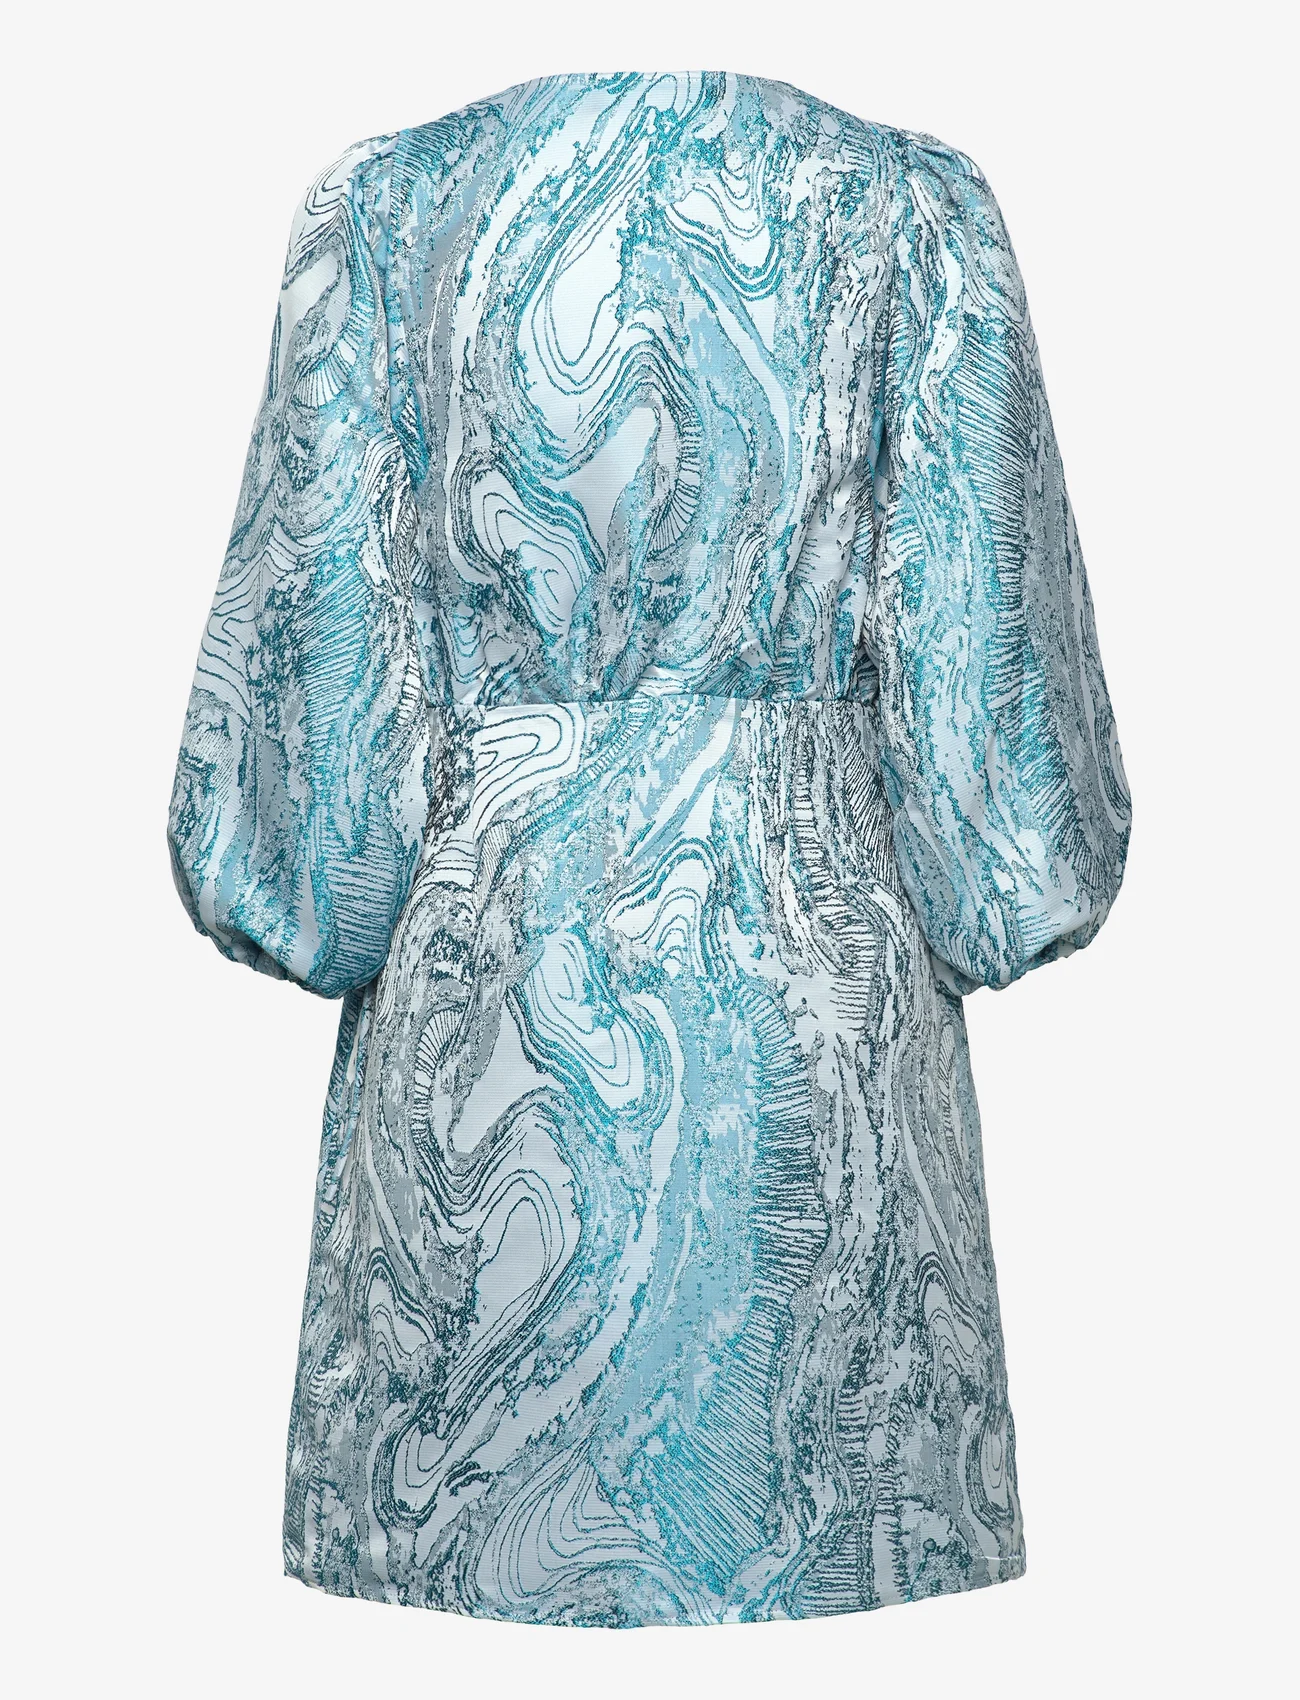 Minus - MSAlika Short Wrap Dress - festmode zu outlet-preisen - lake blue - 1